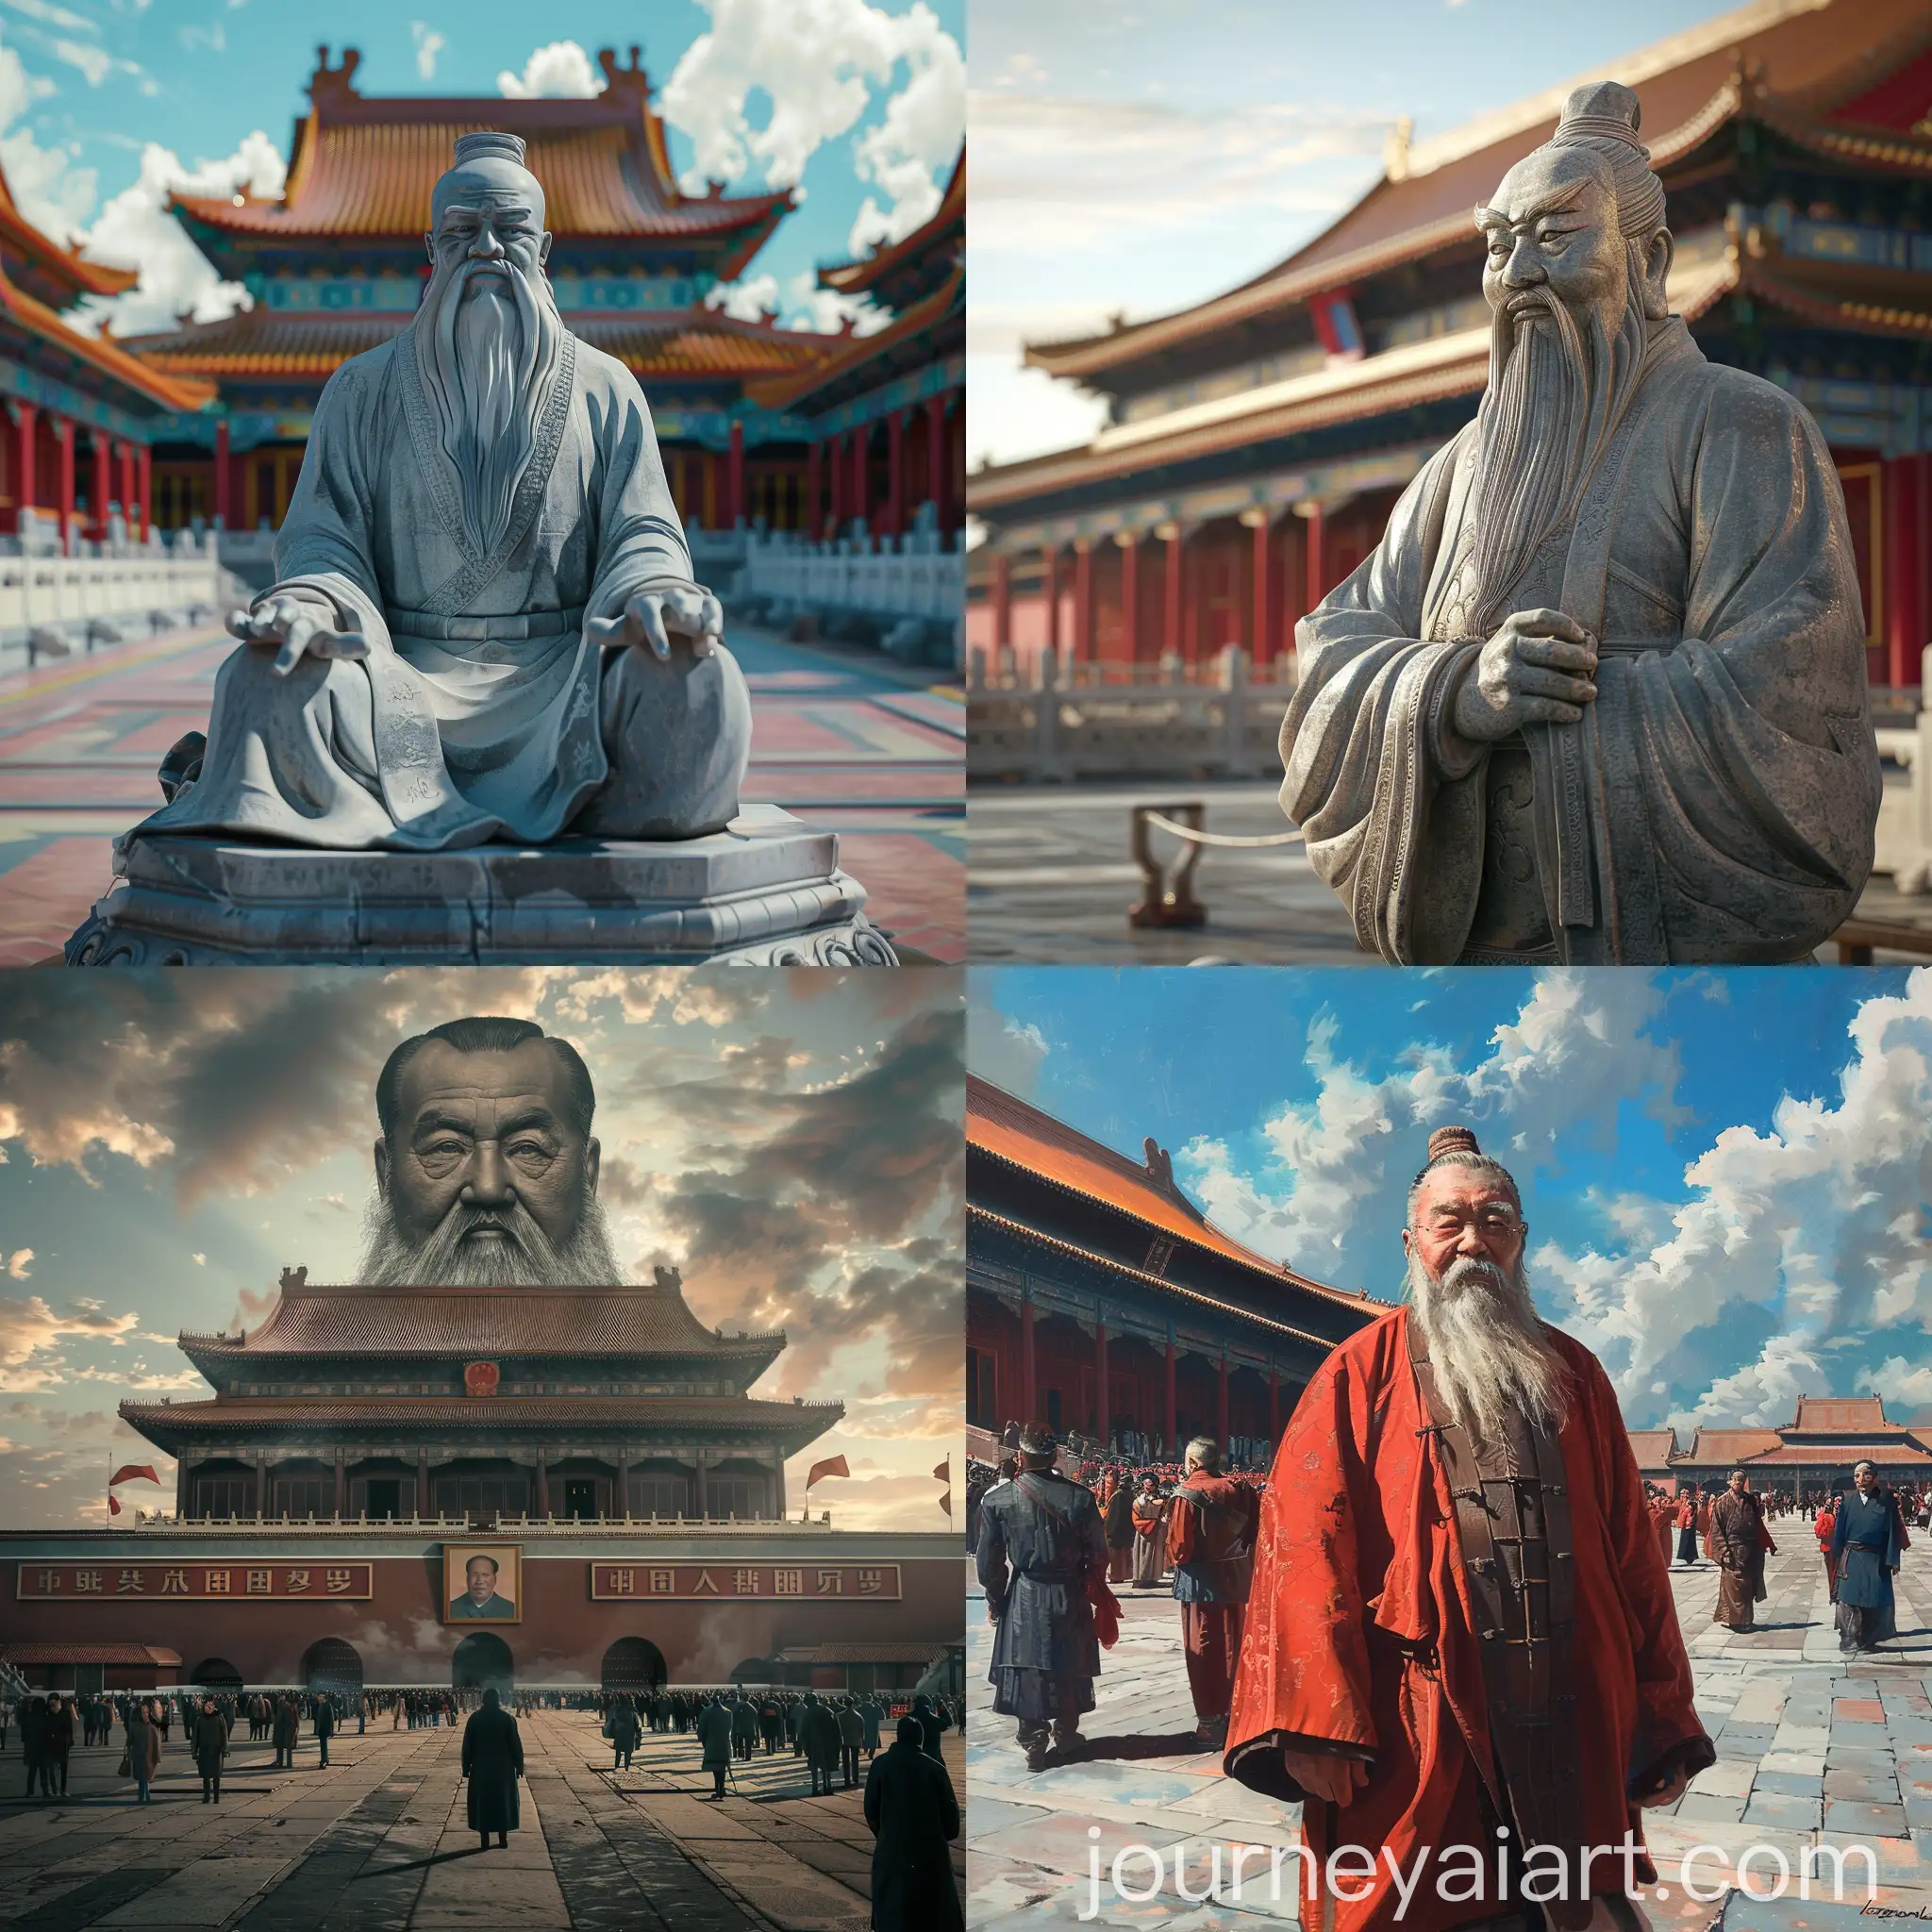 Chinese-Philosopher-Confucius-in-Red-Square-Photorealistic-Image